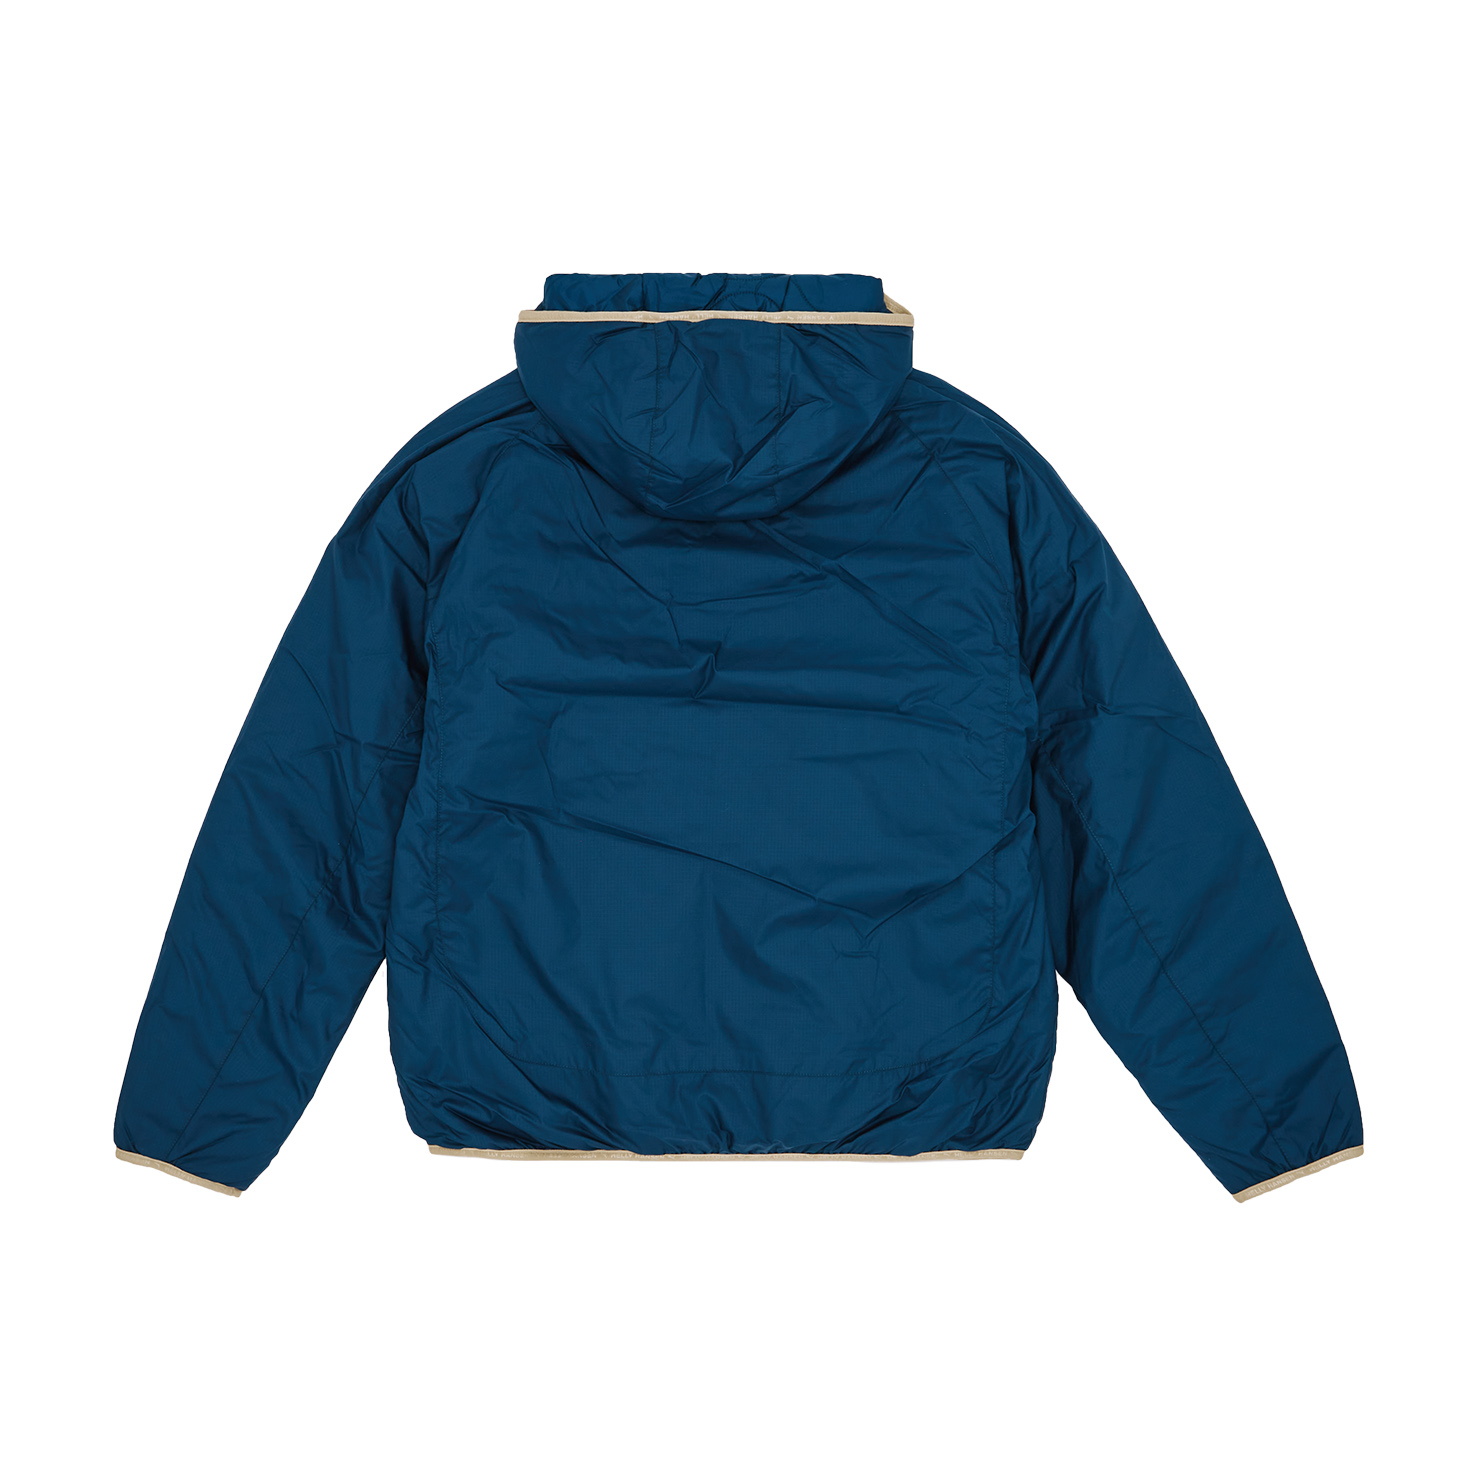 PUMA x HELLY HANSEN Rev. Padded Jacket I PUMA, размер L, цвет синий PM532841 - фото 2